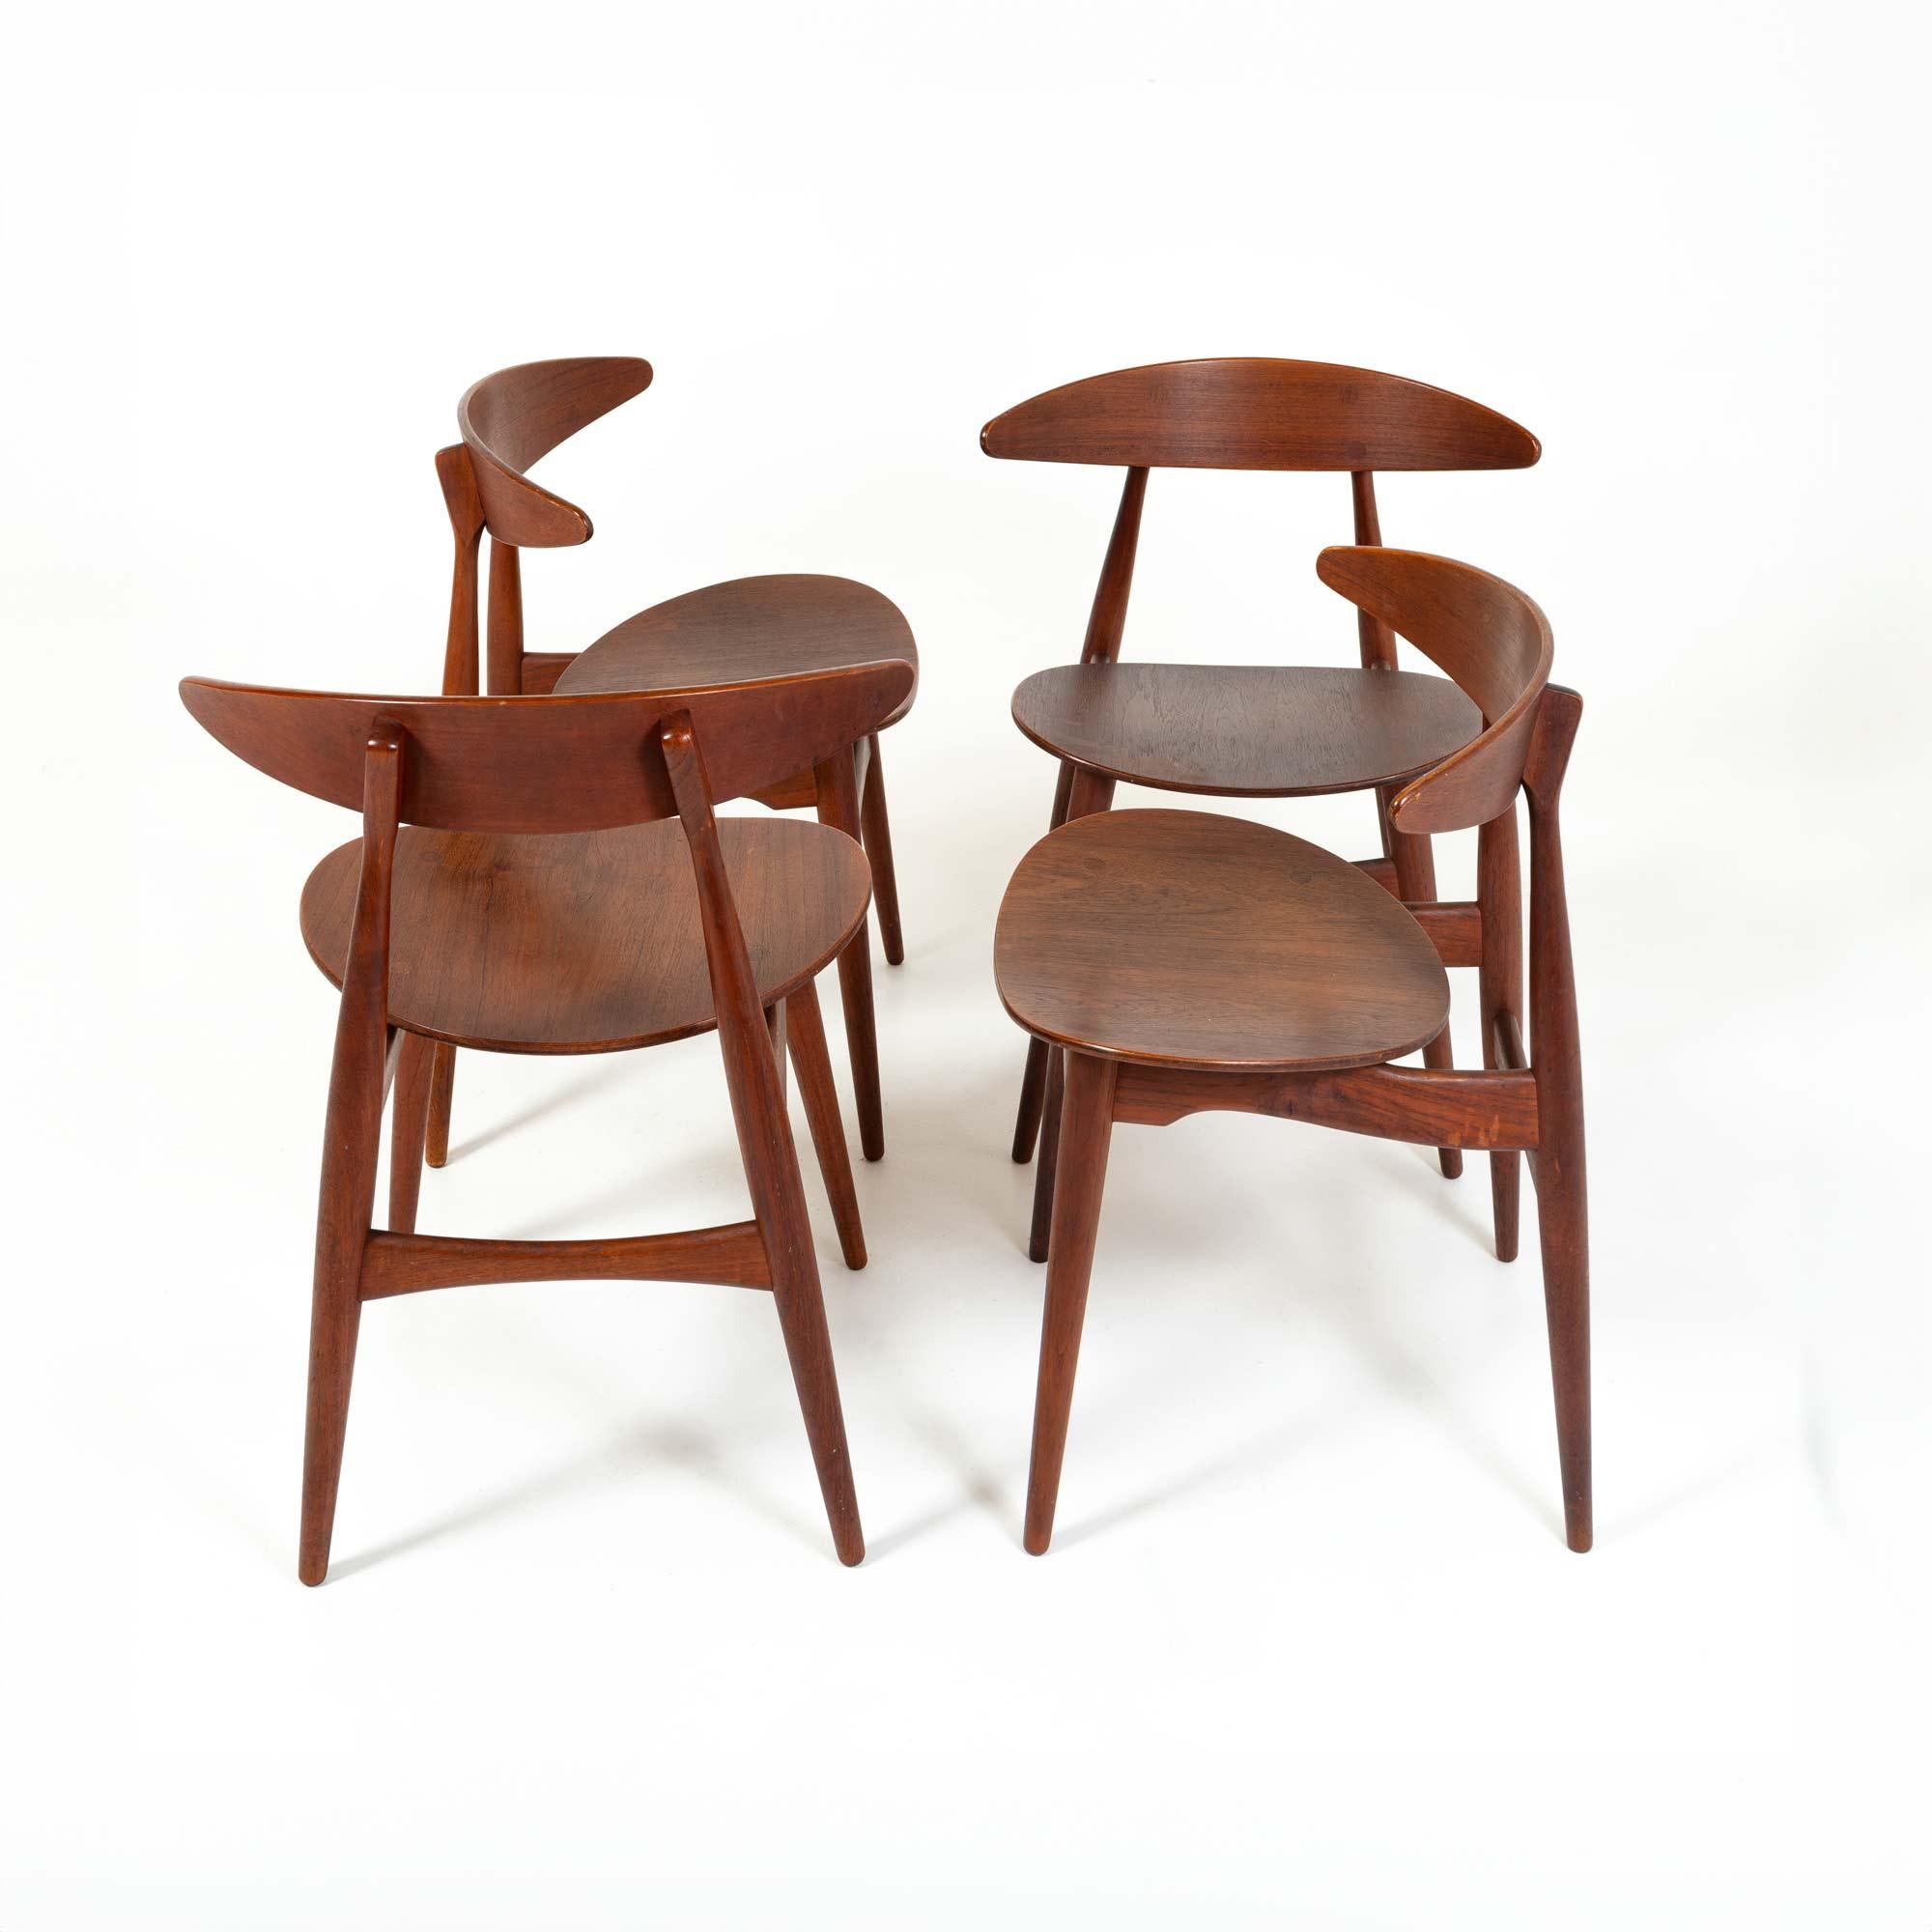 Mid-20th Century Set of 4 Hans Wegner for Carl Hansen & Son CH-33 Chairs in Teak For Sale